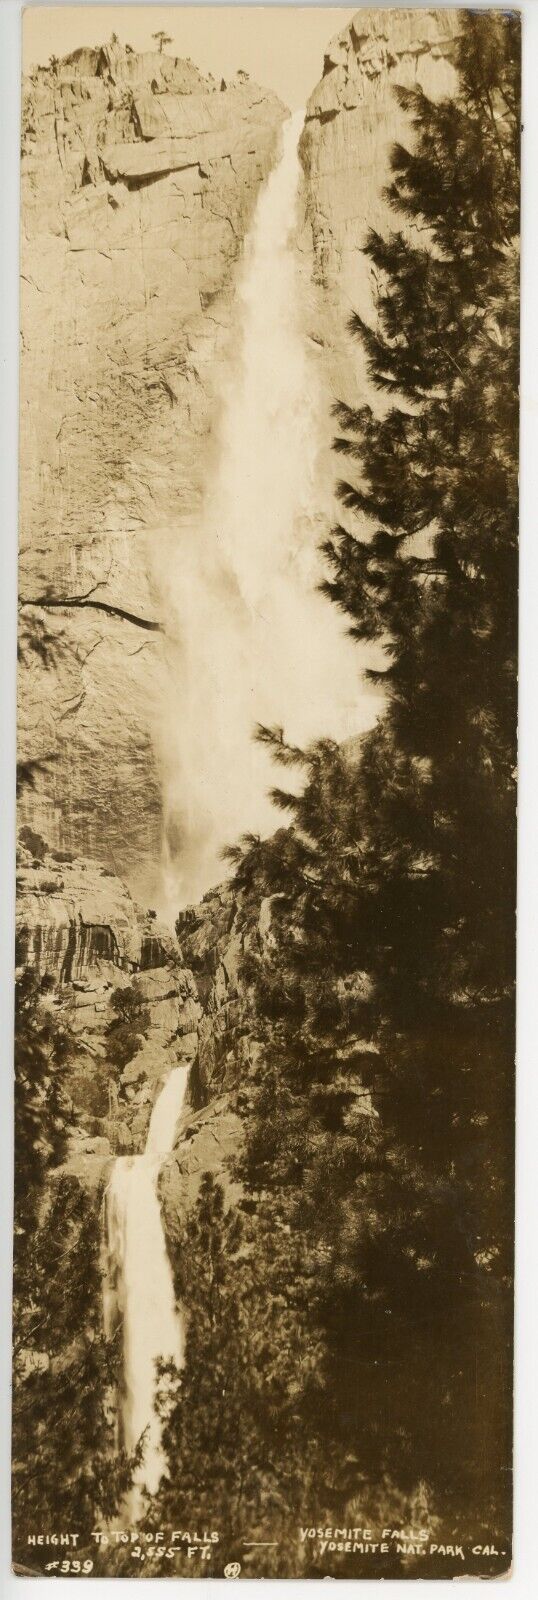 RARE Vintage Photo of Yosemite Falls from 1936